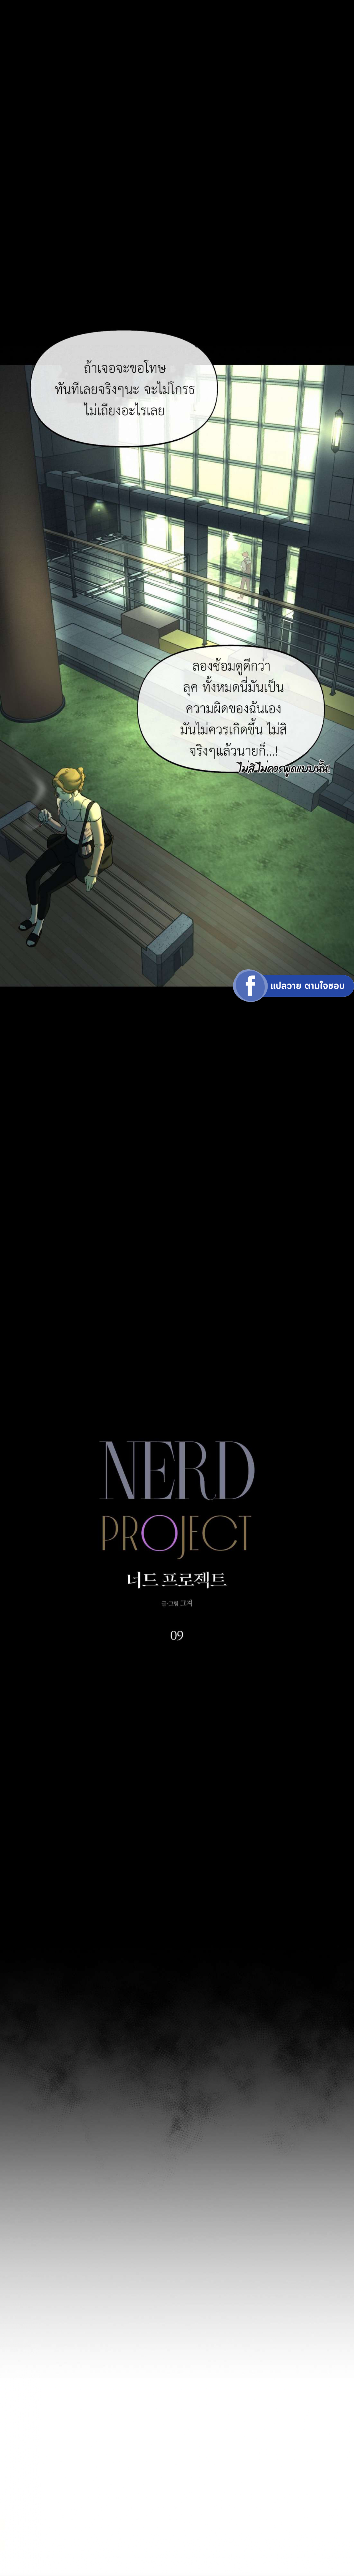 Nerd Project 9 03